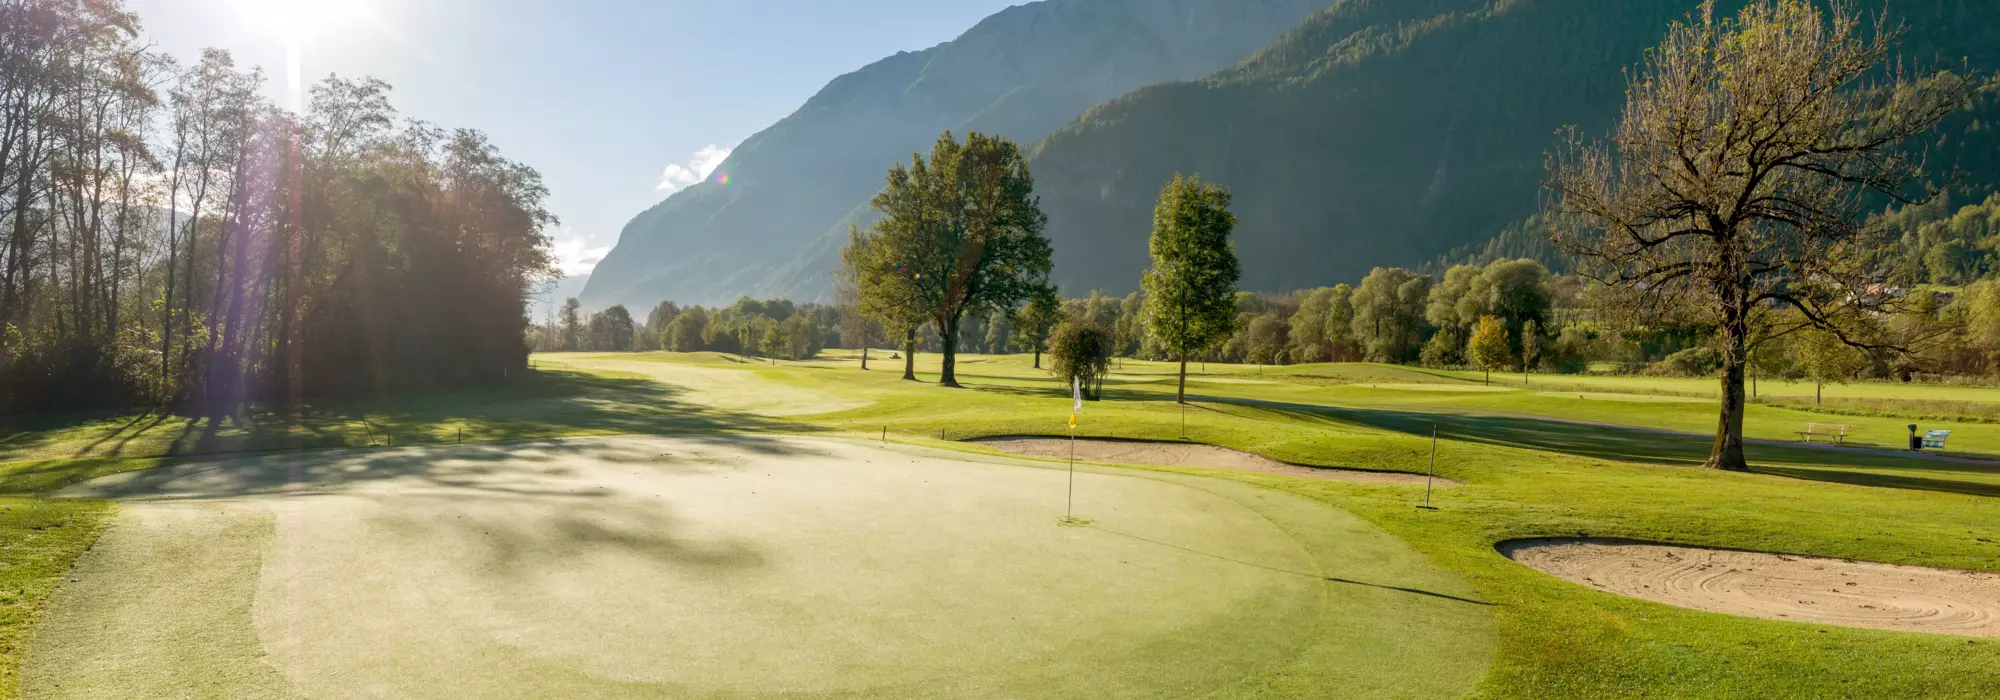 Golfgenuss in Osttirol © Martin Lugger